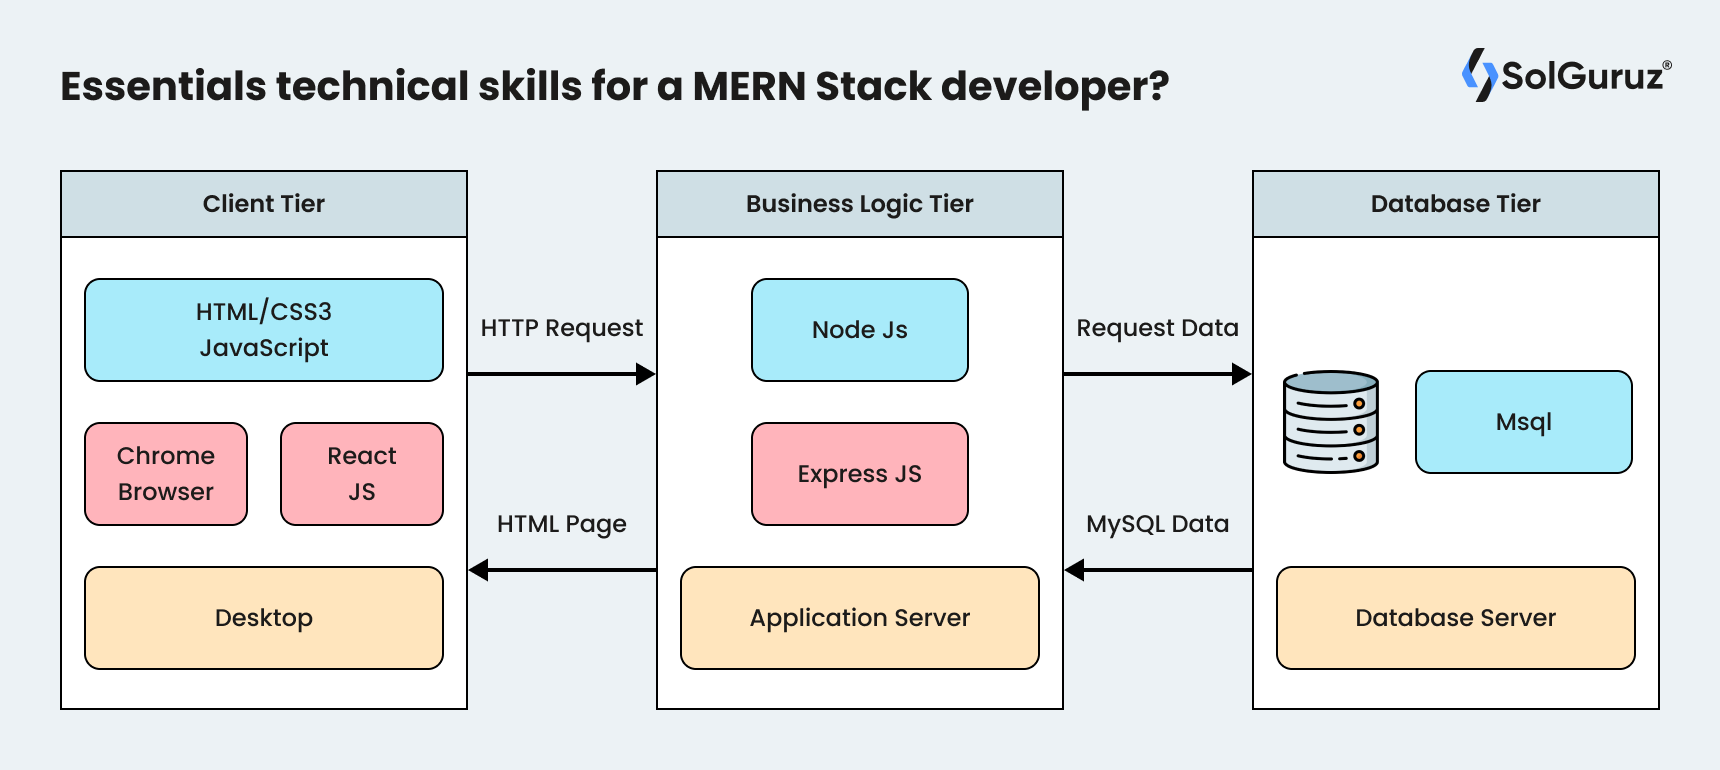 Essentials technical skills for a MERN Stack developer